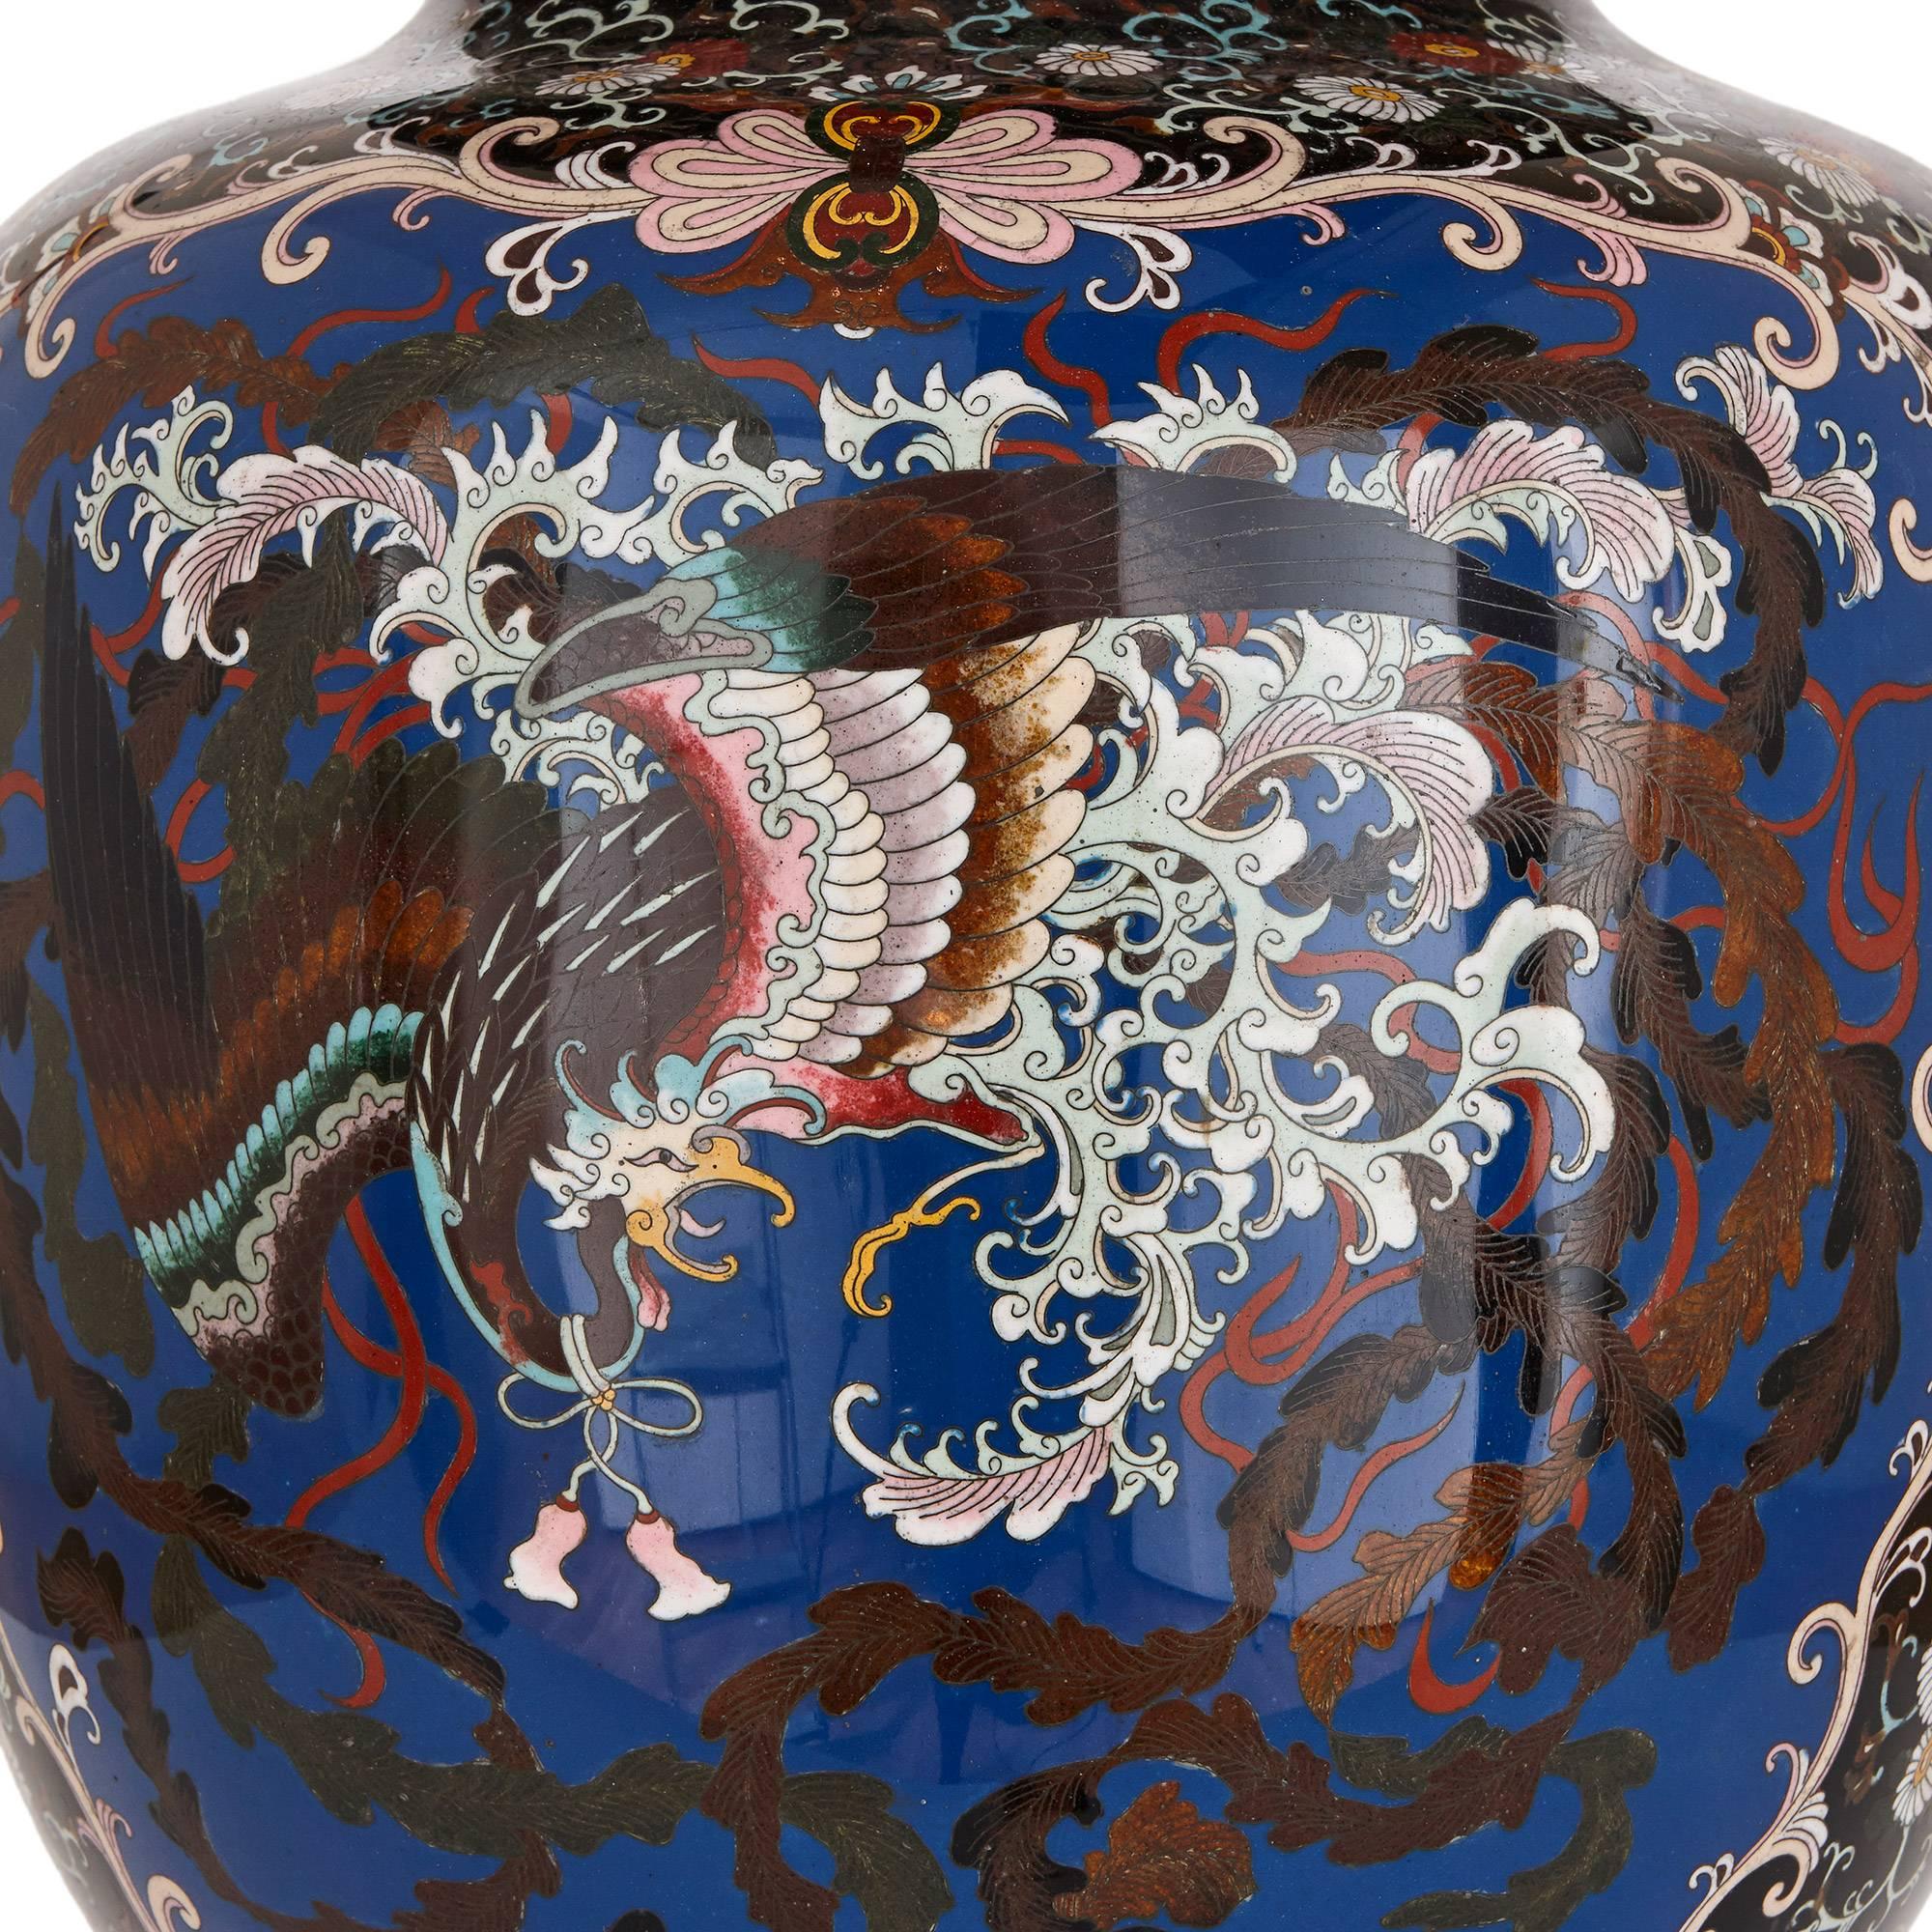 japanese dragon vase